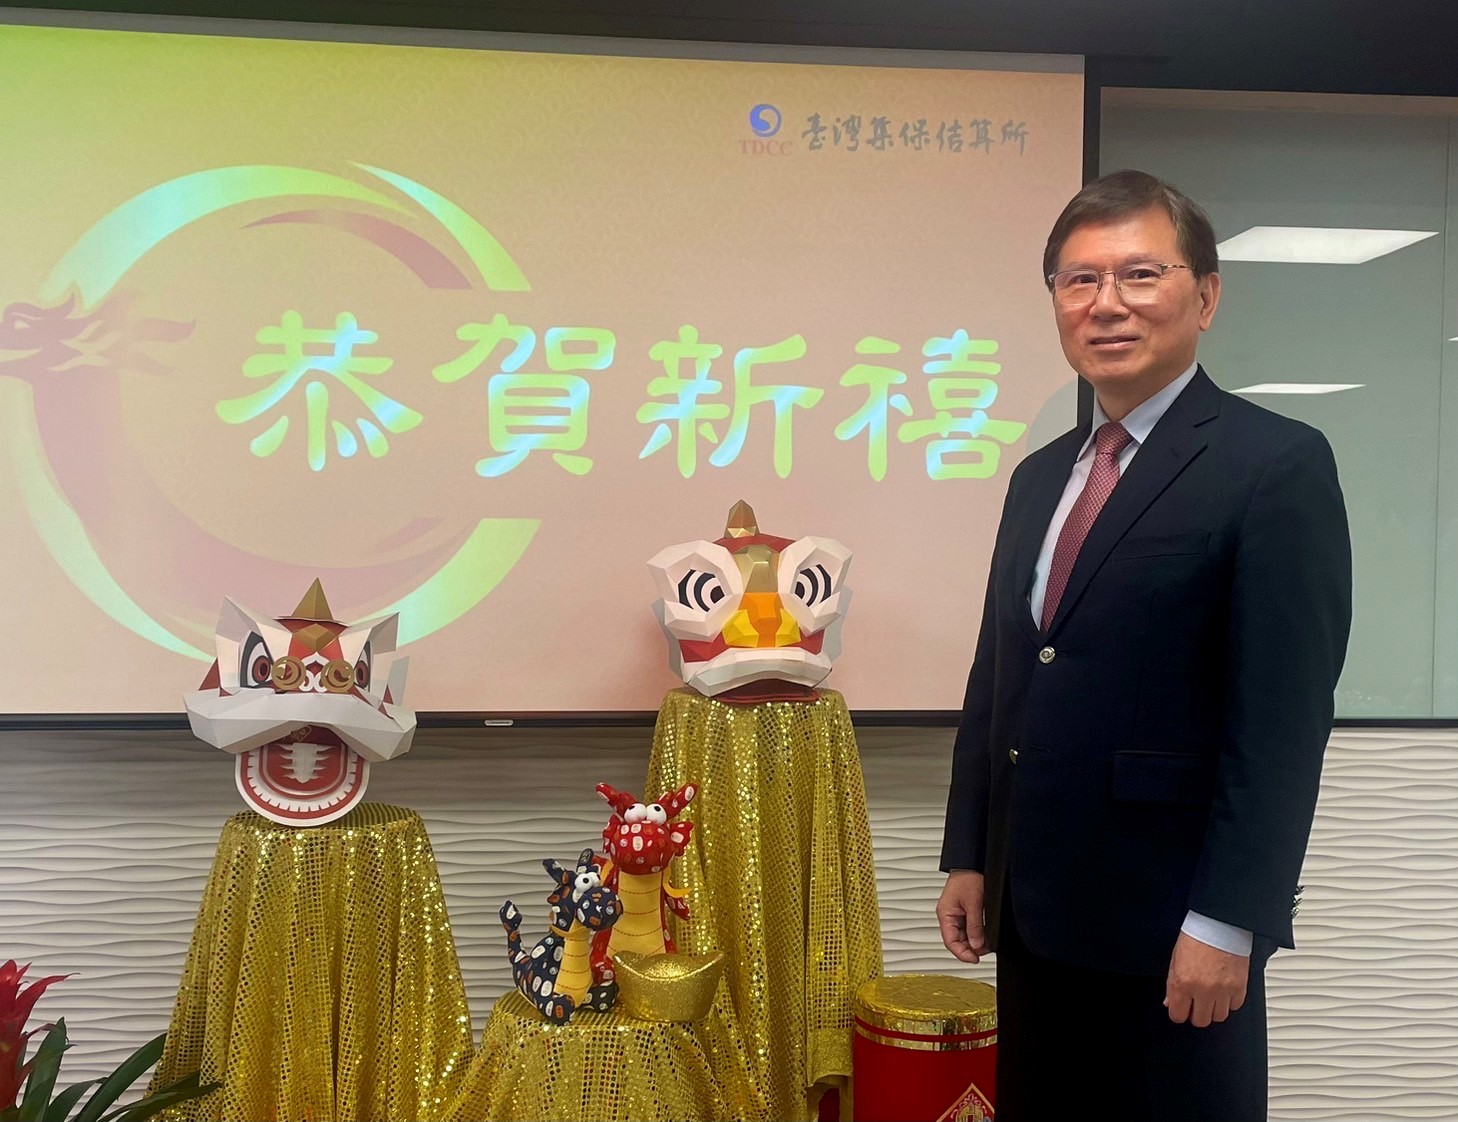 TDCC Chairman Bing-Huei wishes everyone a happy new year